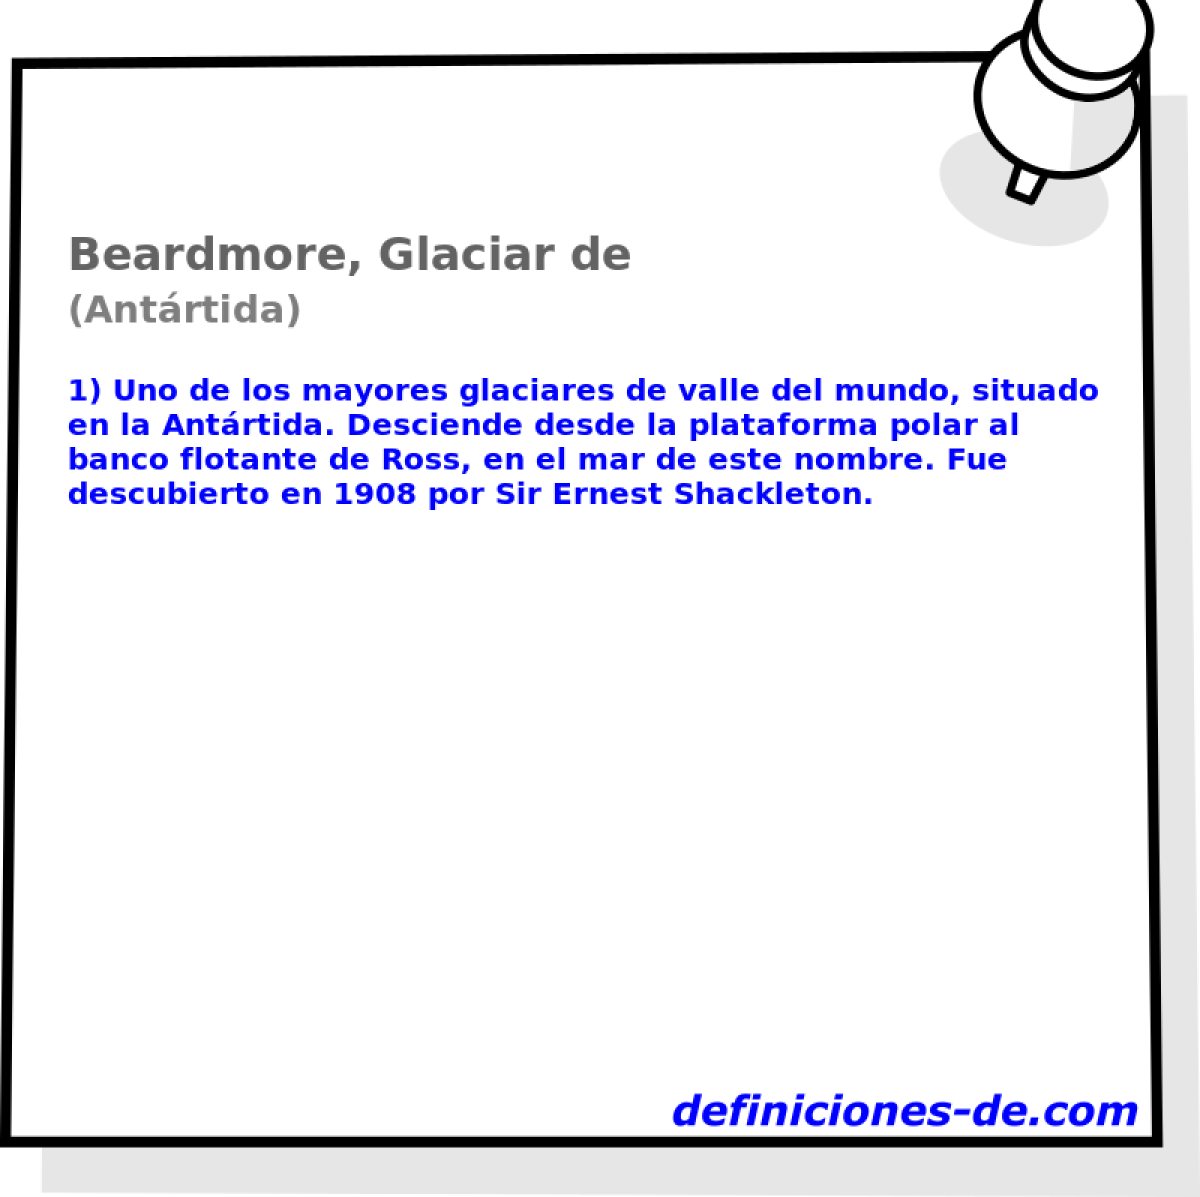 Beardmore, Glaciar de (Antrtida)